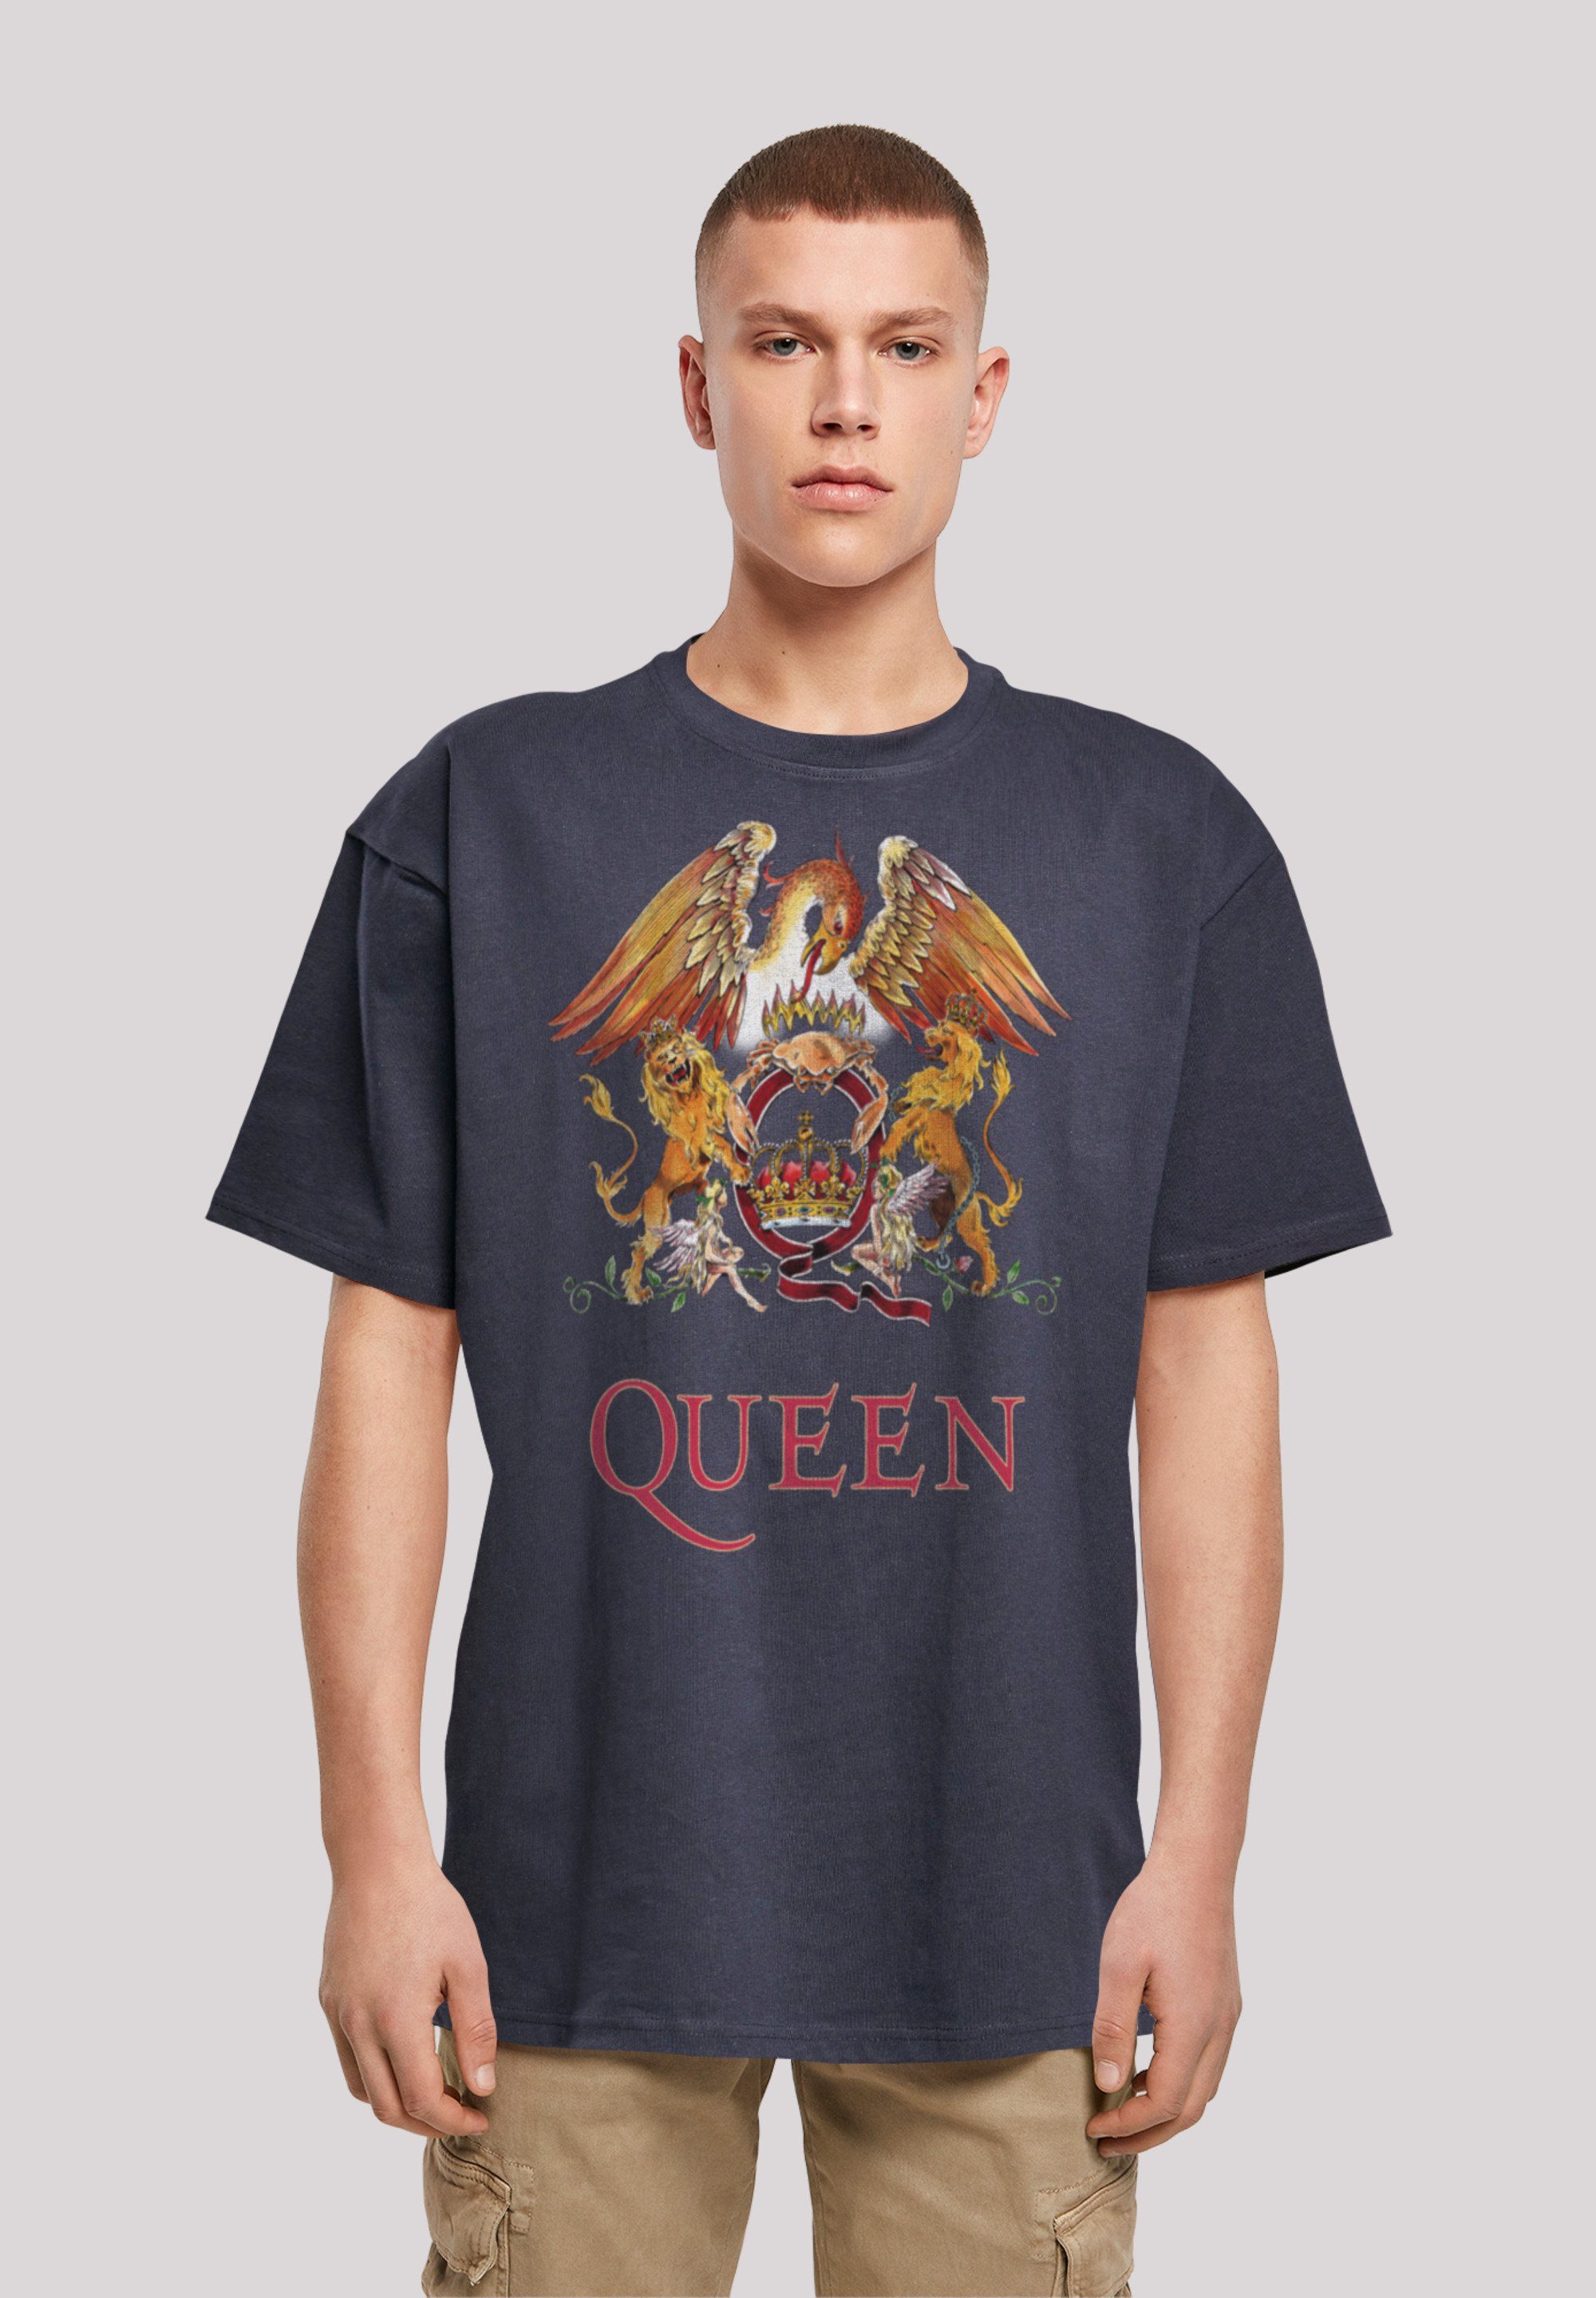 F4NT4STIC Crest Black T-Shirt Rockband Queen navy Print Classic